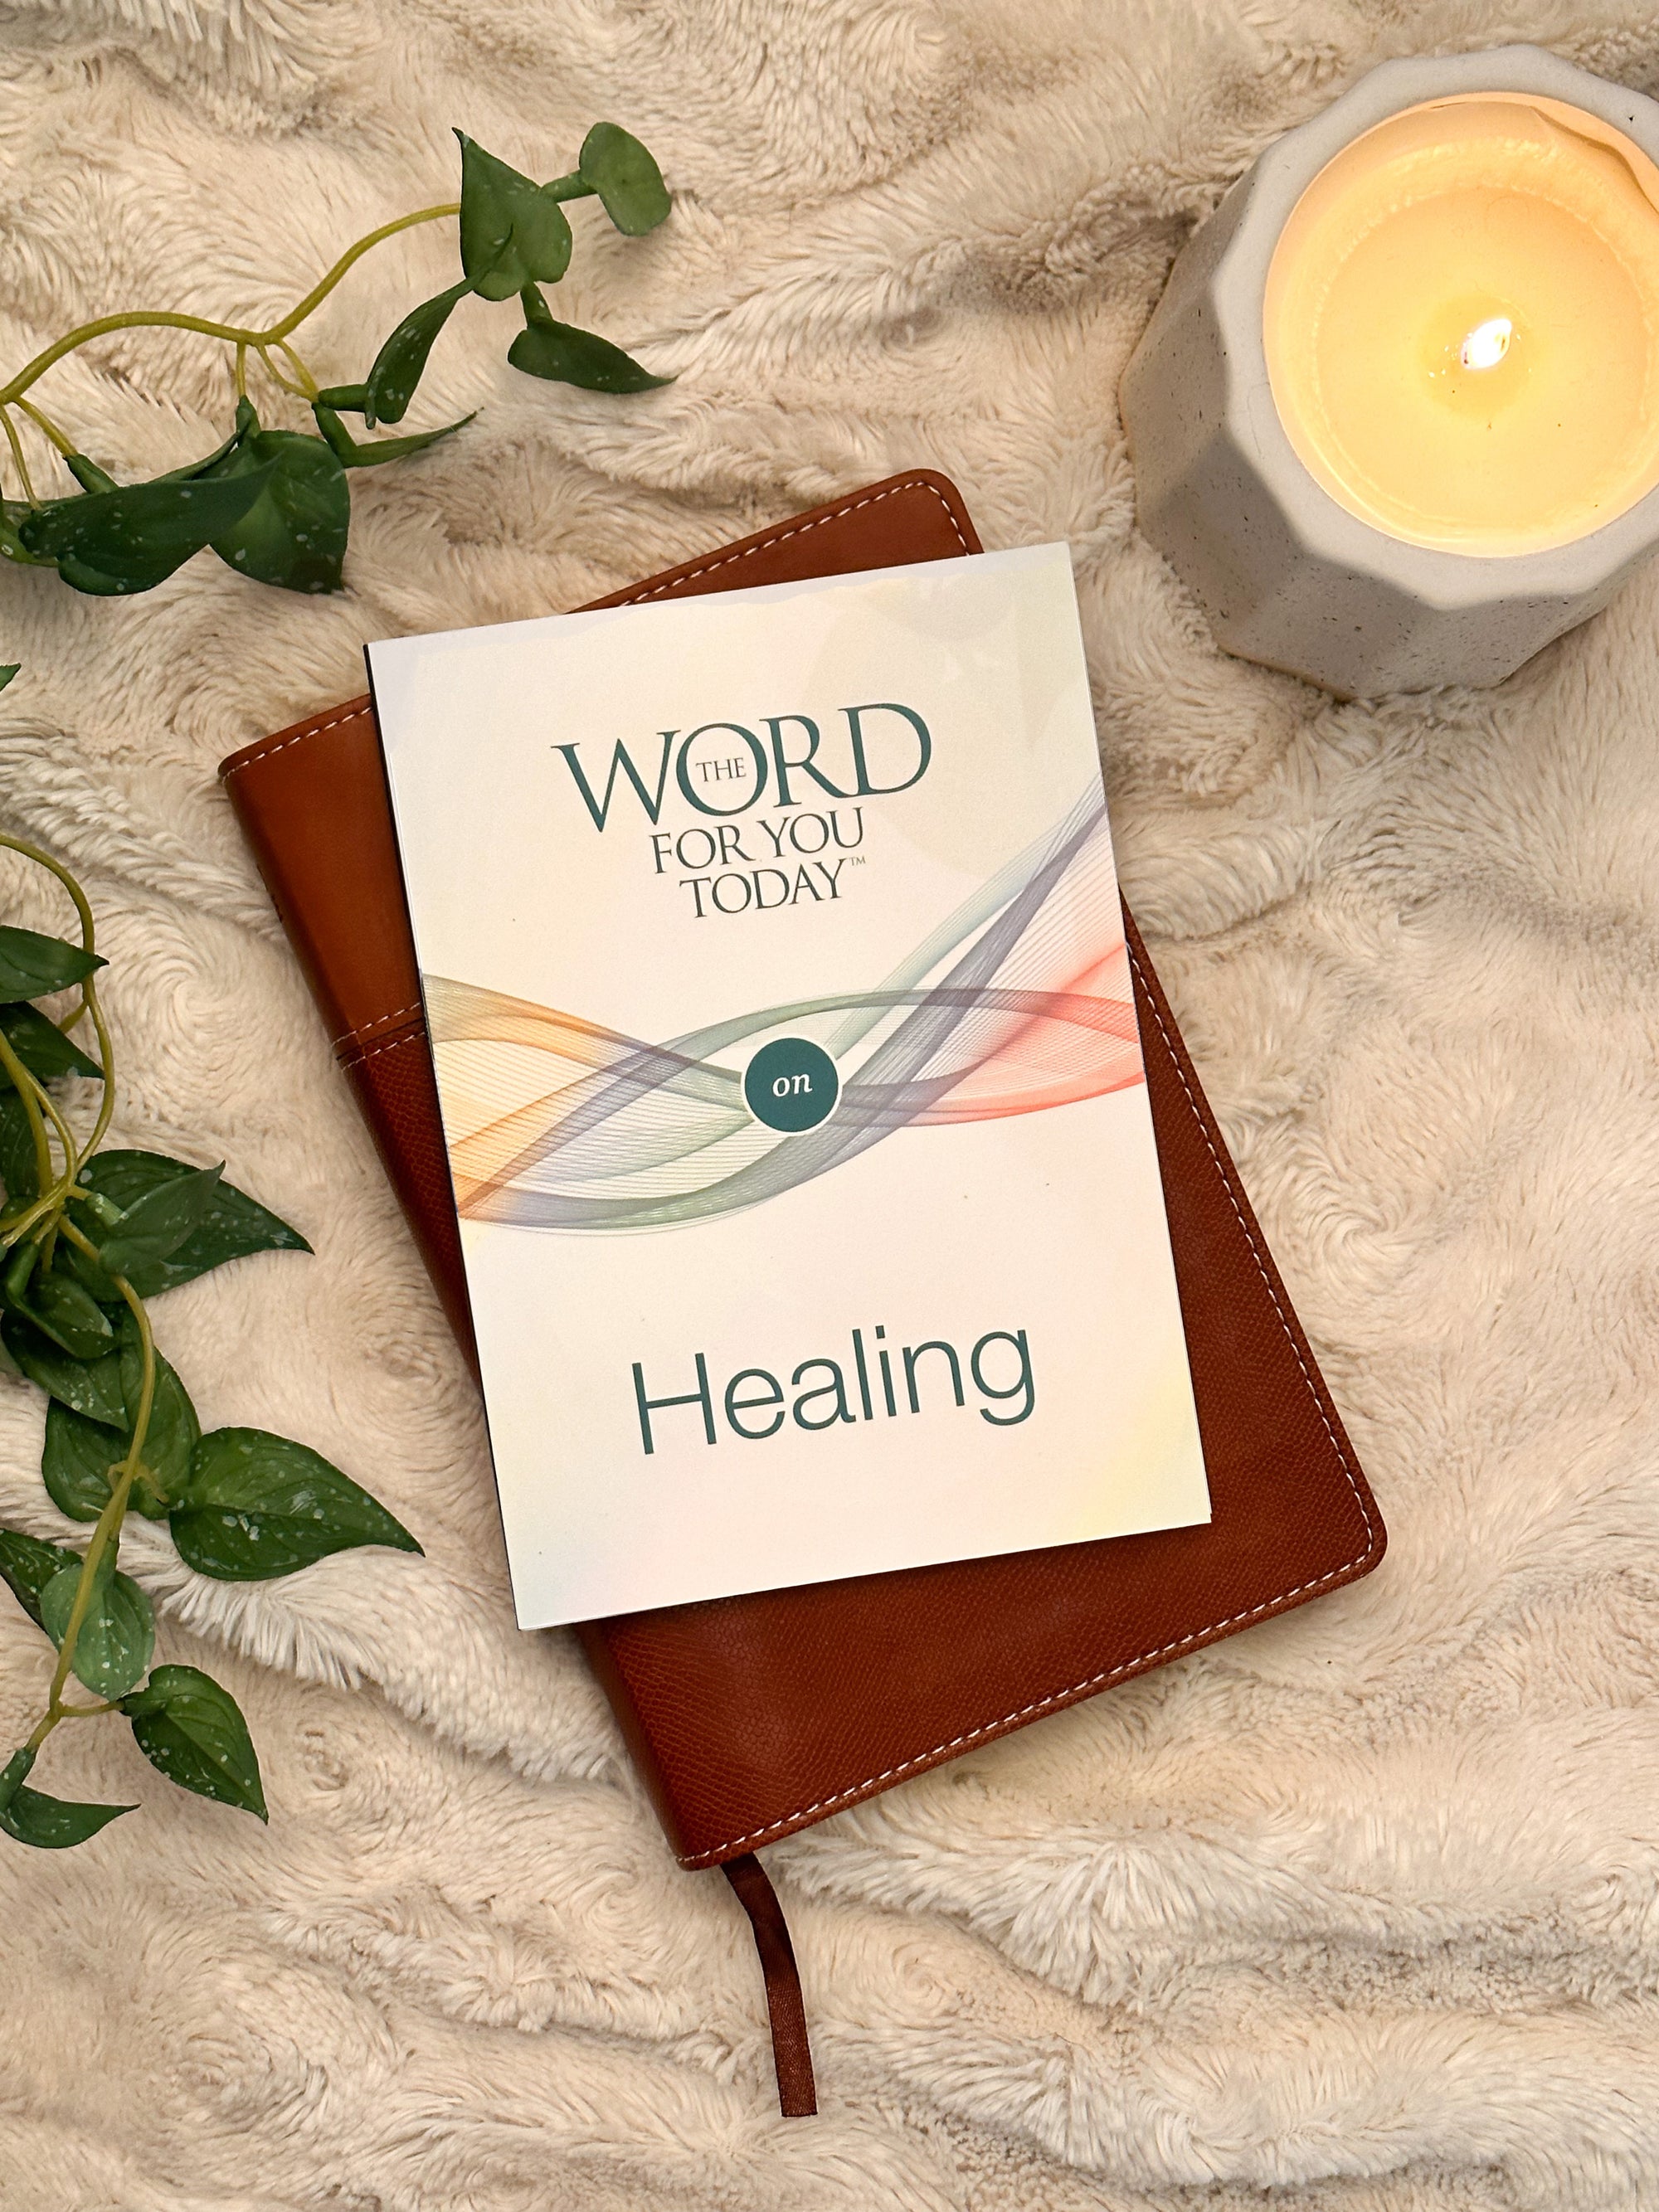 Do you need healing today?